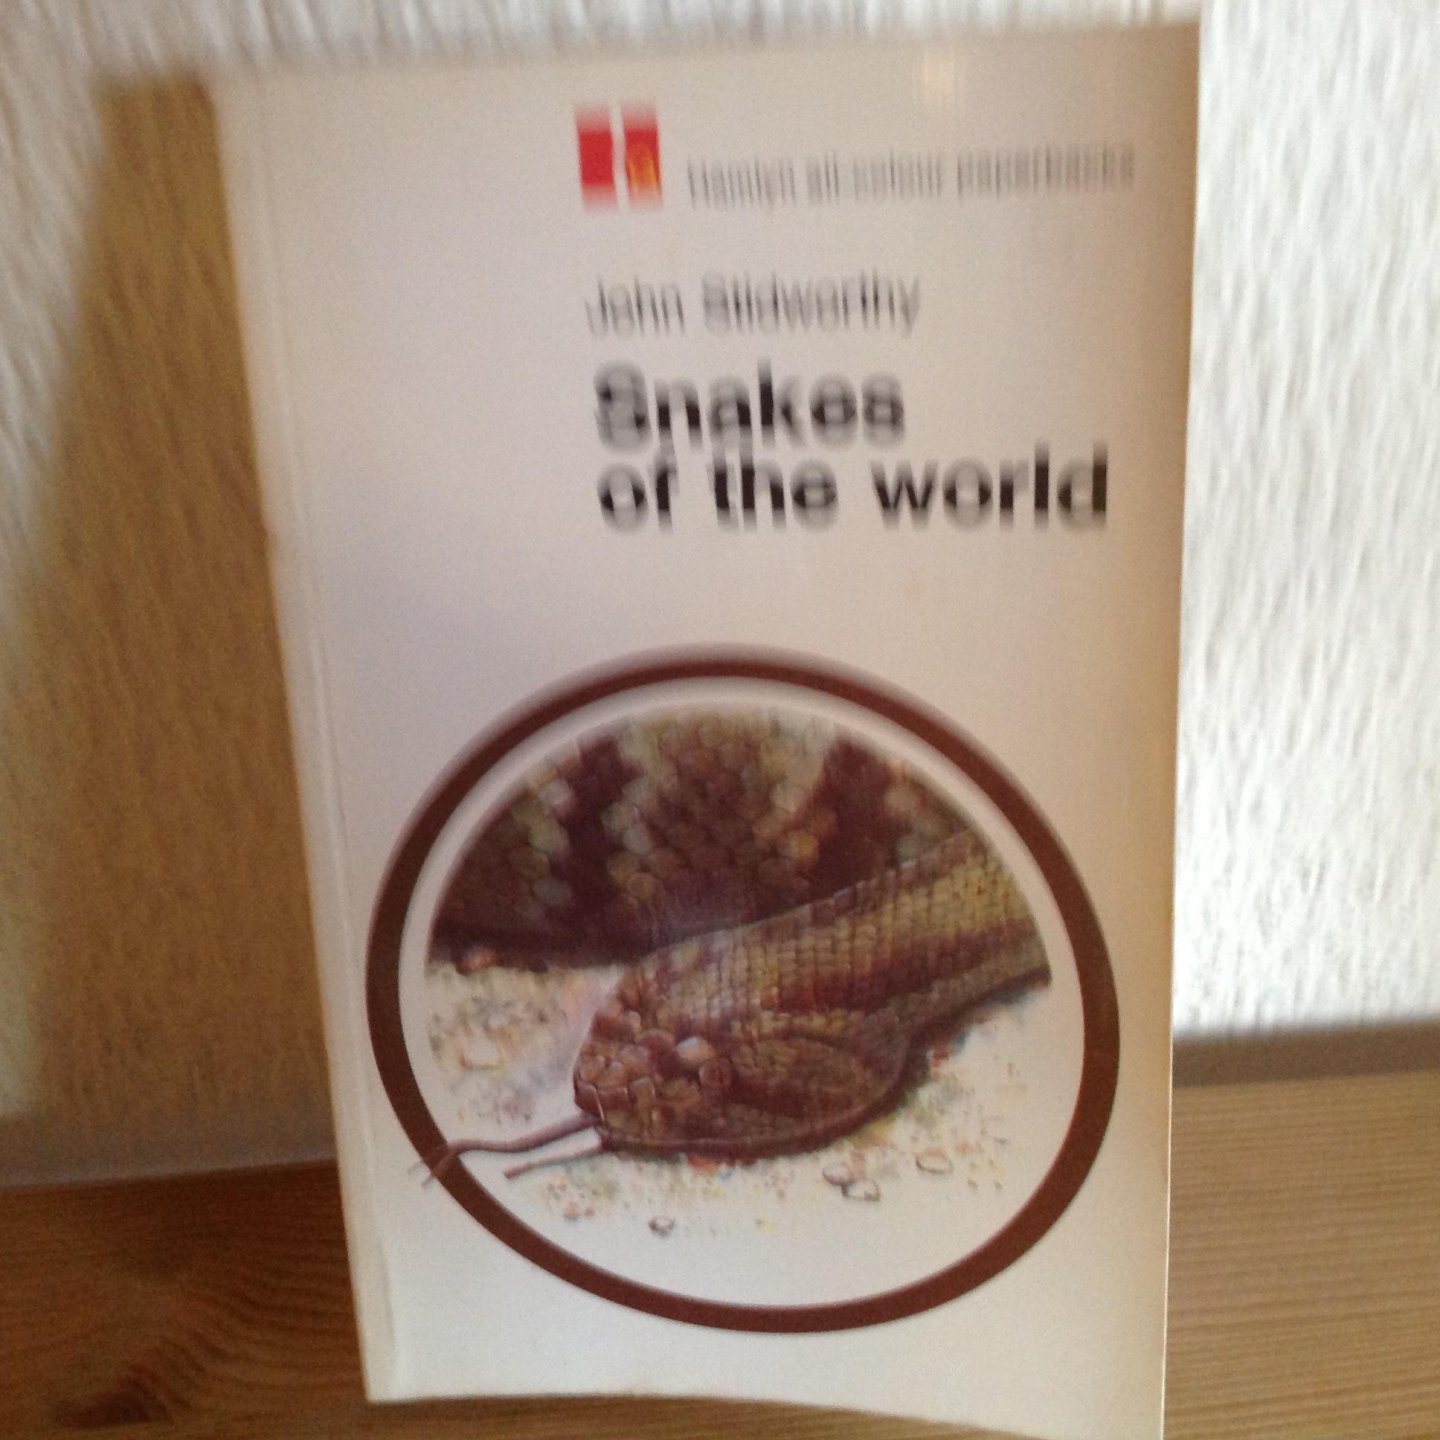 Stidworthy - Snakes of the world